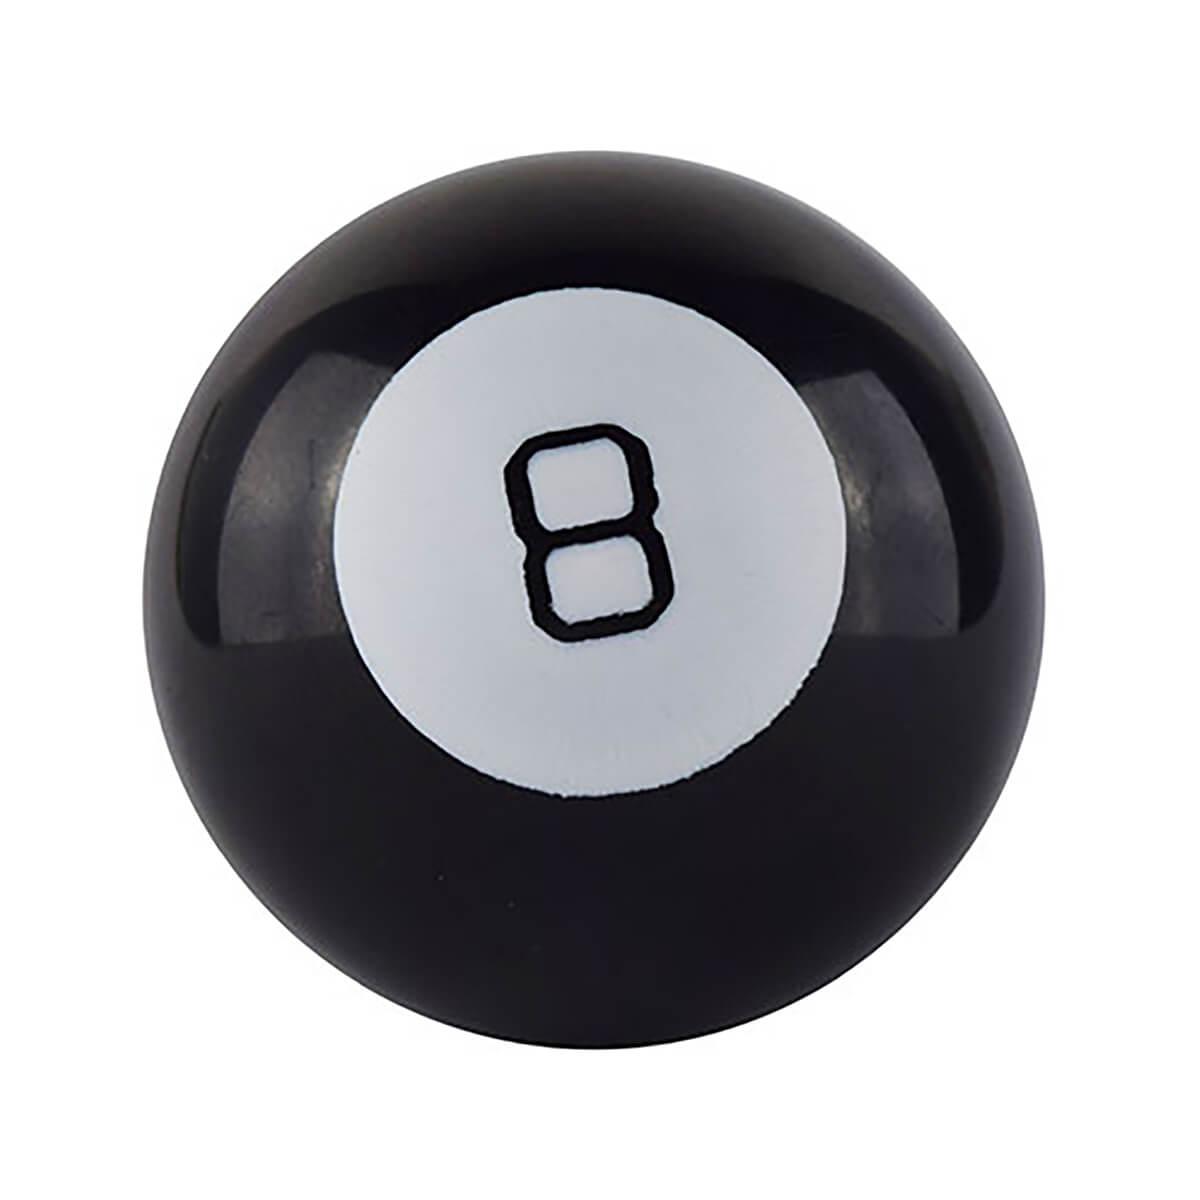 World's Smallest Magic 8 Ball : Mini Classic : Fortune Teller